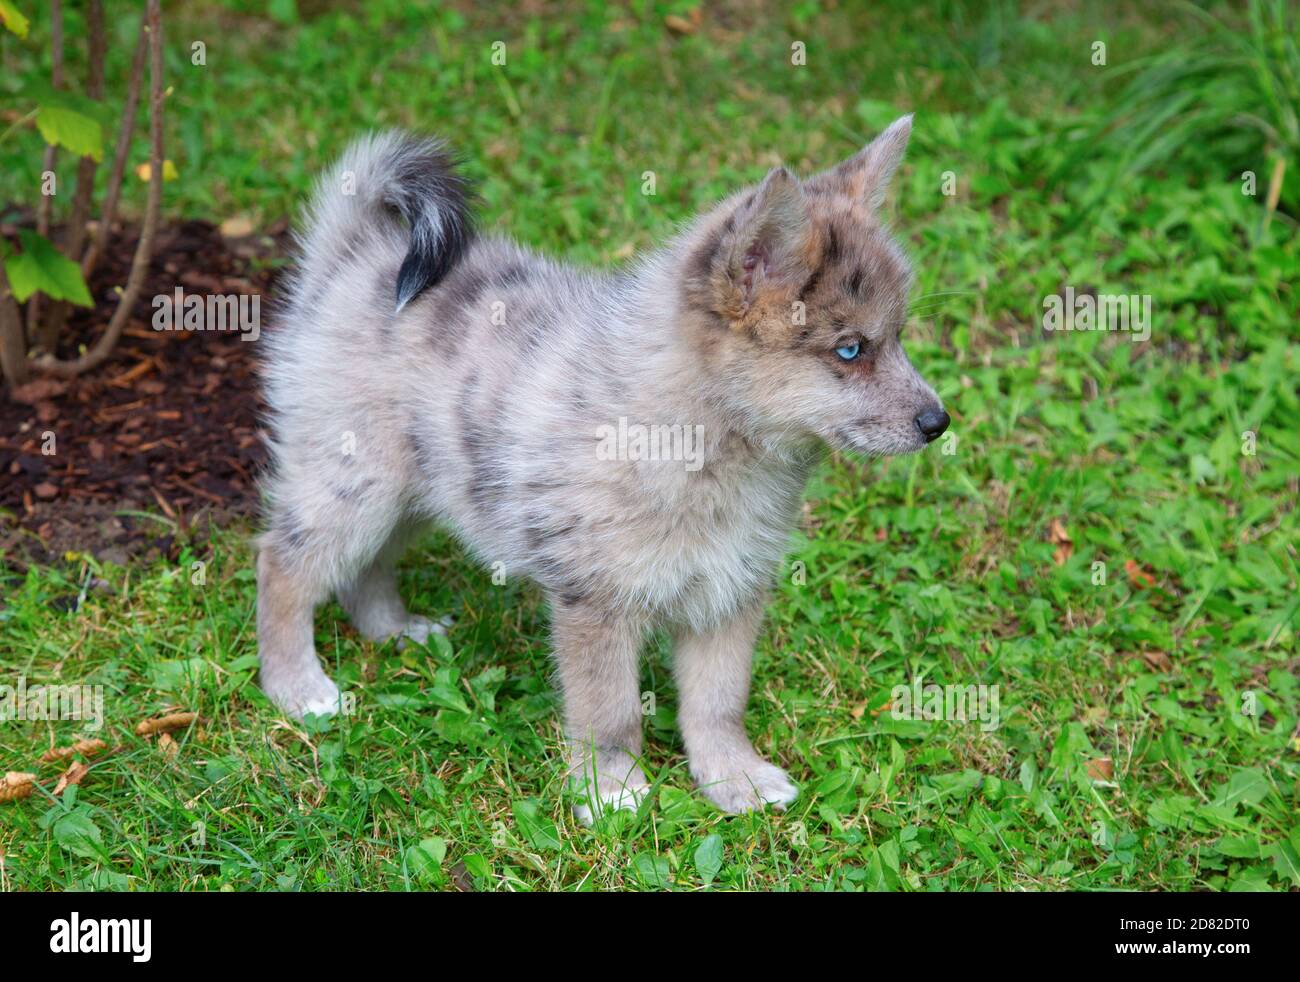 Wolf husky hybrid hi-res stock photography and - Alamy